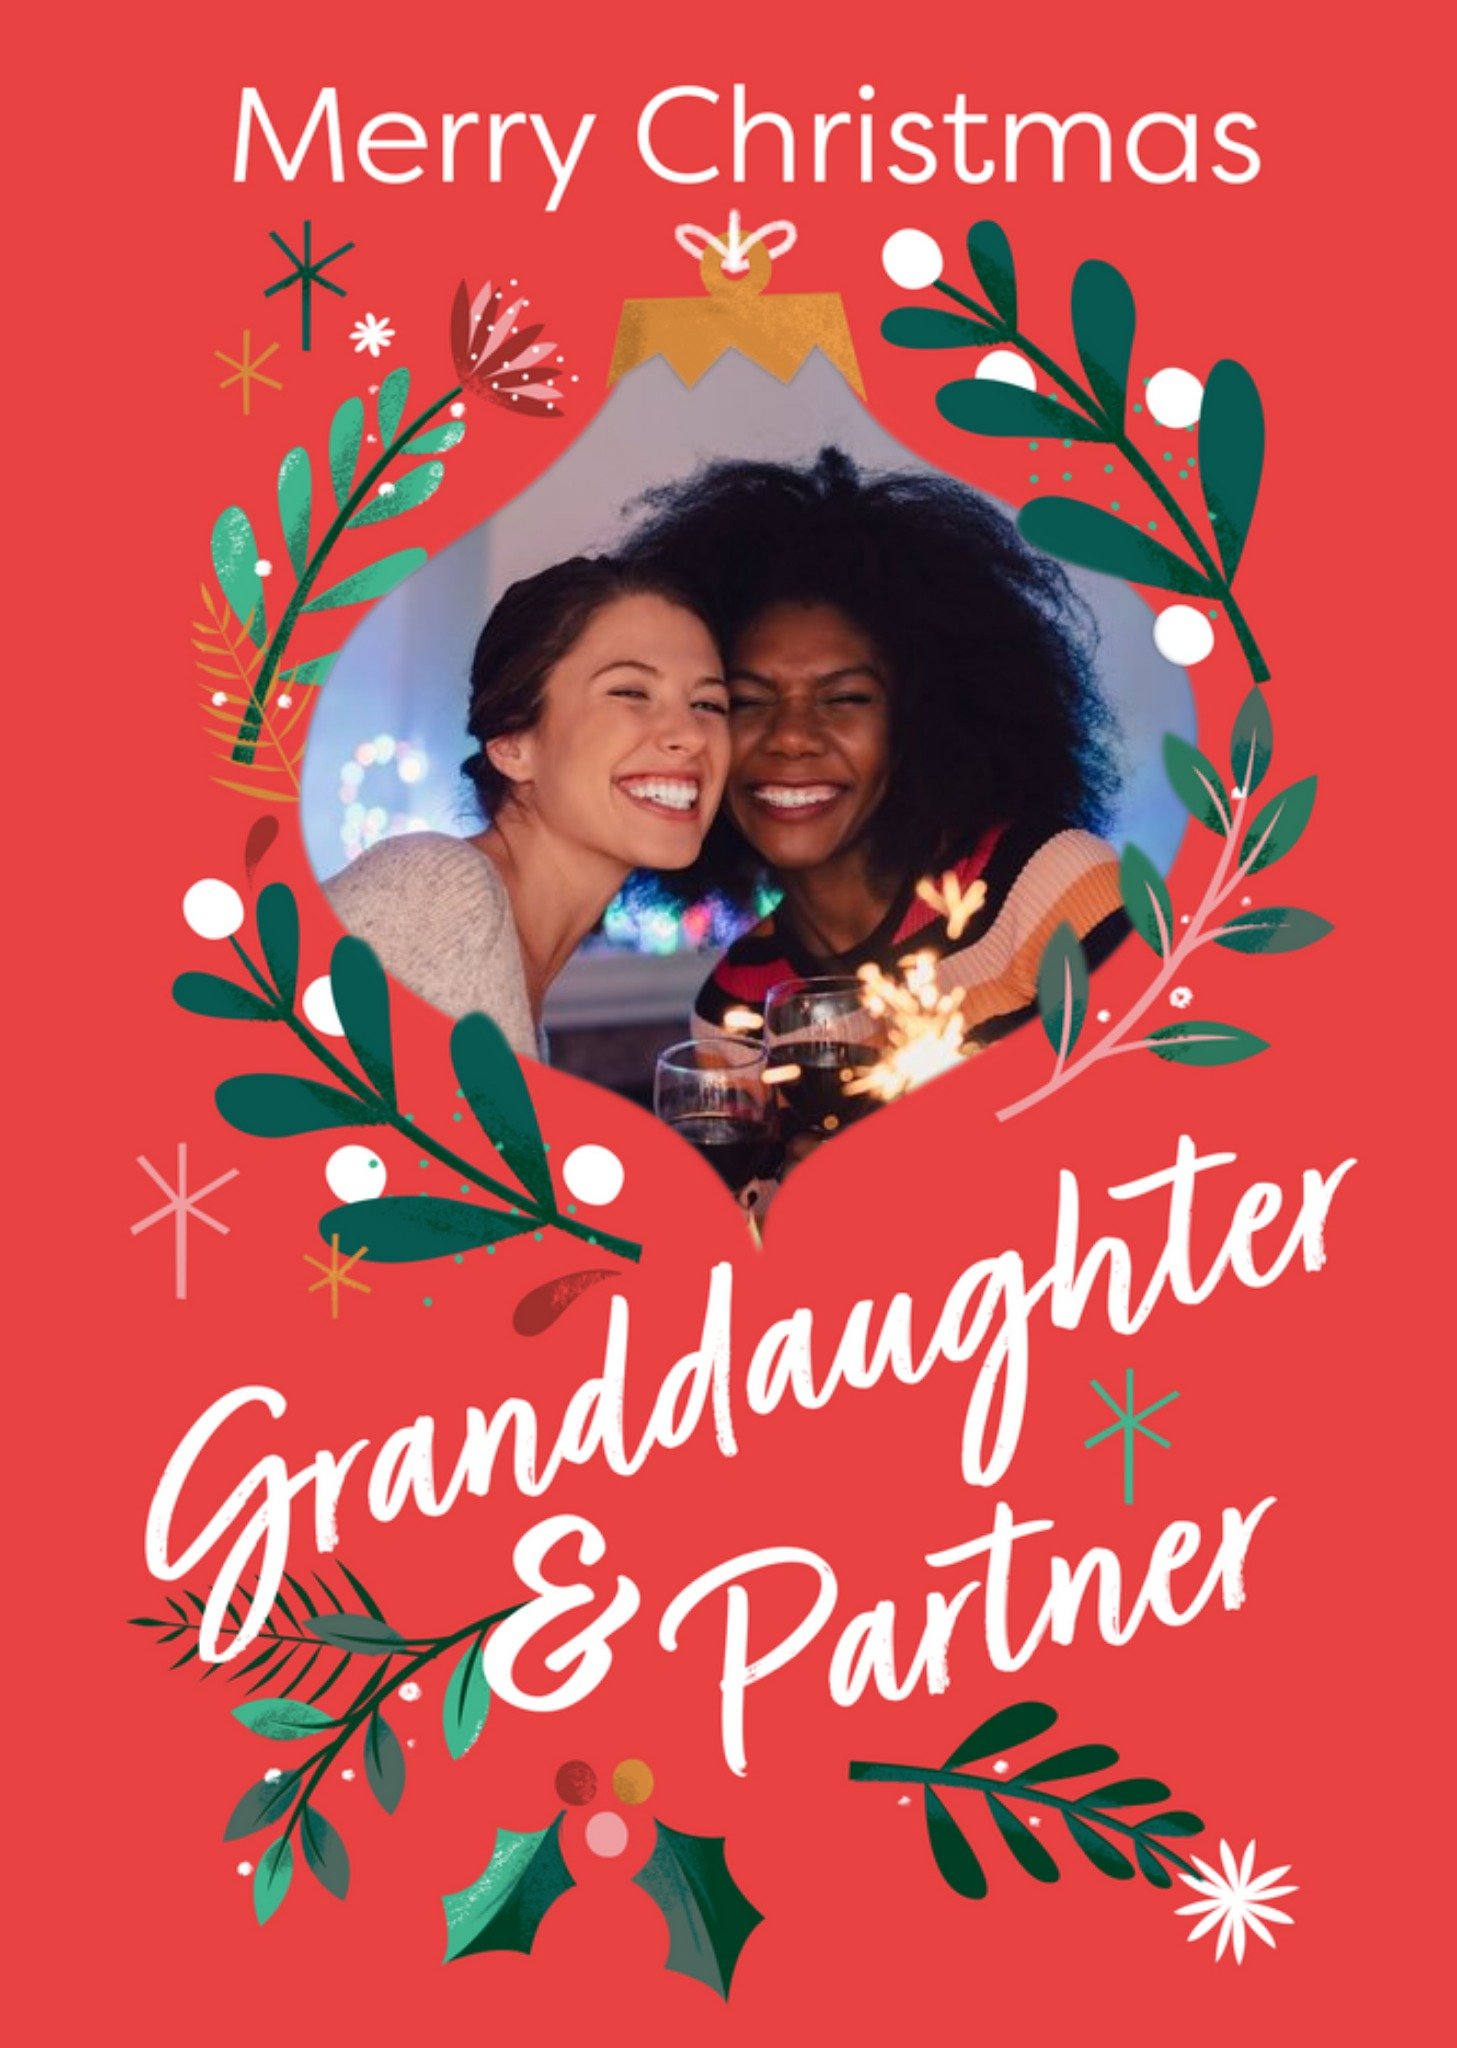 Moonpig Retro Festive Bauble Photo Upload Granddaughter And Partner Christmas Card Ecard